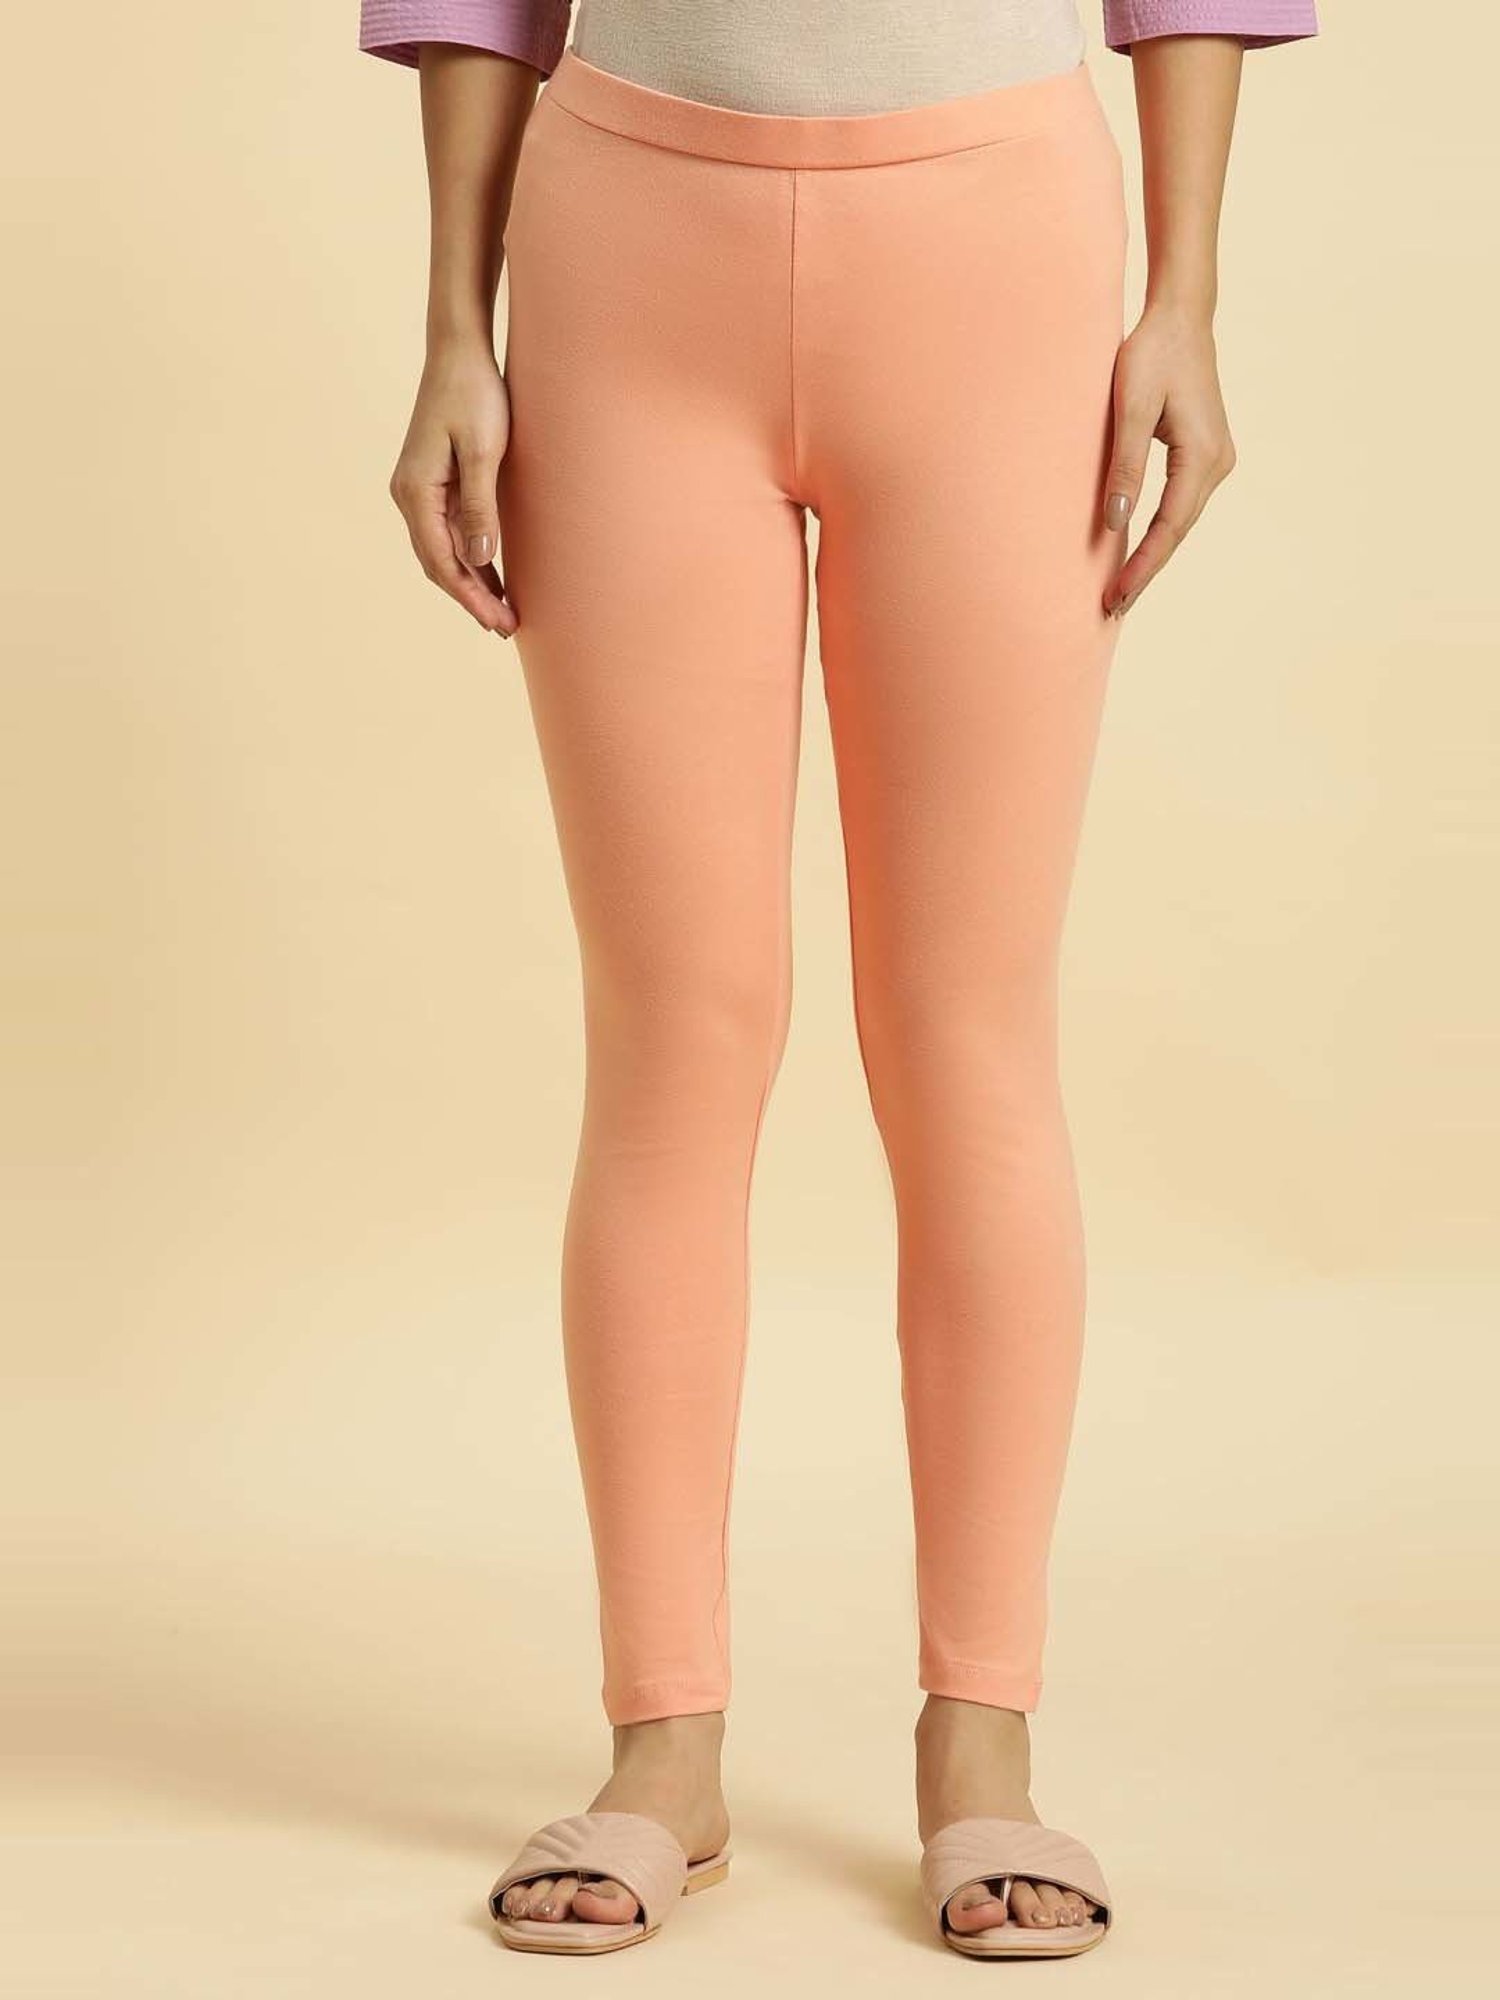 W Orange Leggings - Buy W Orange Leggings online in India